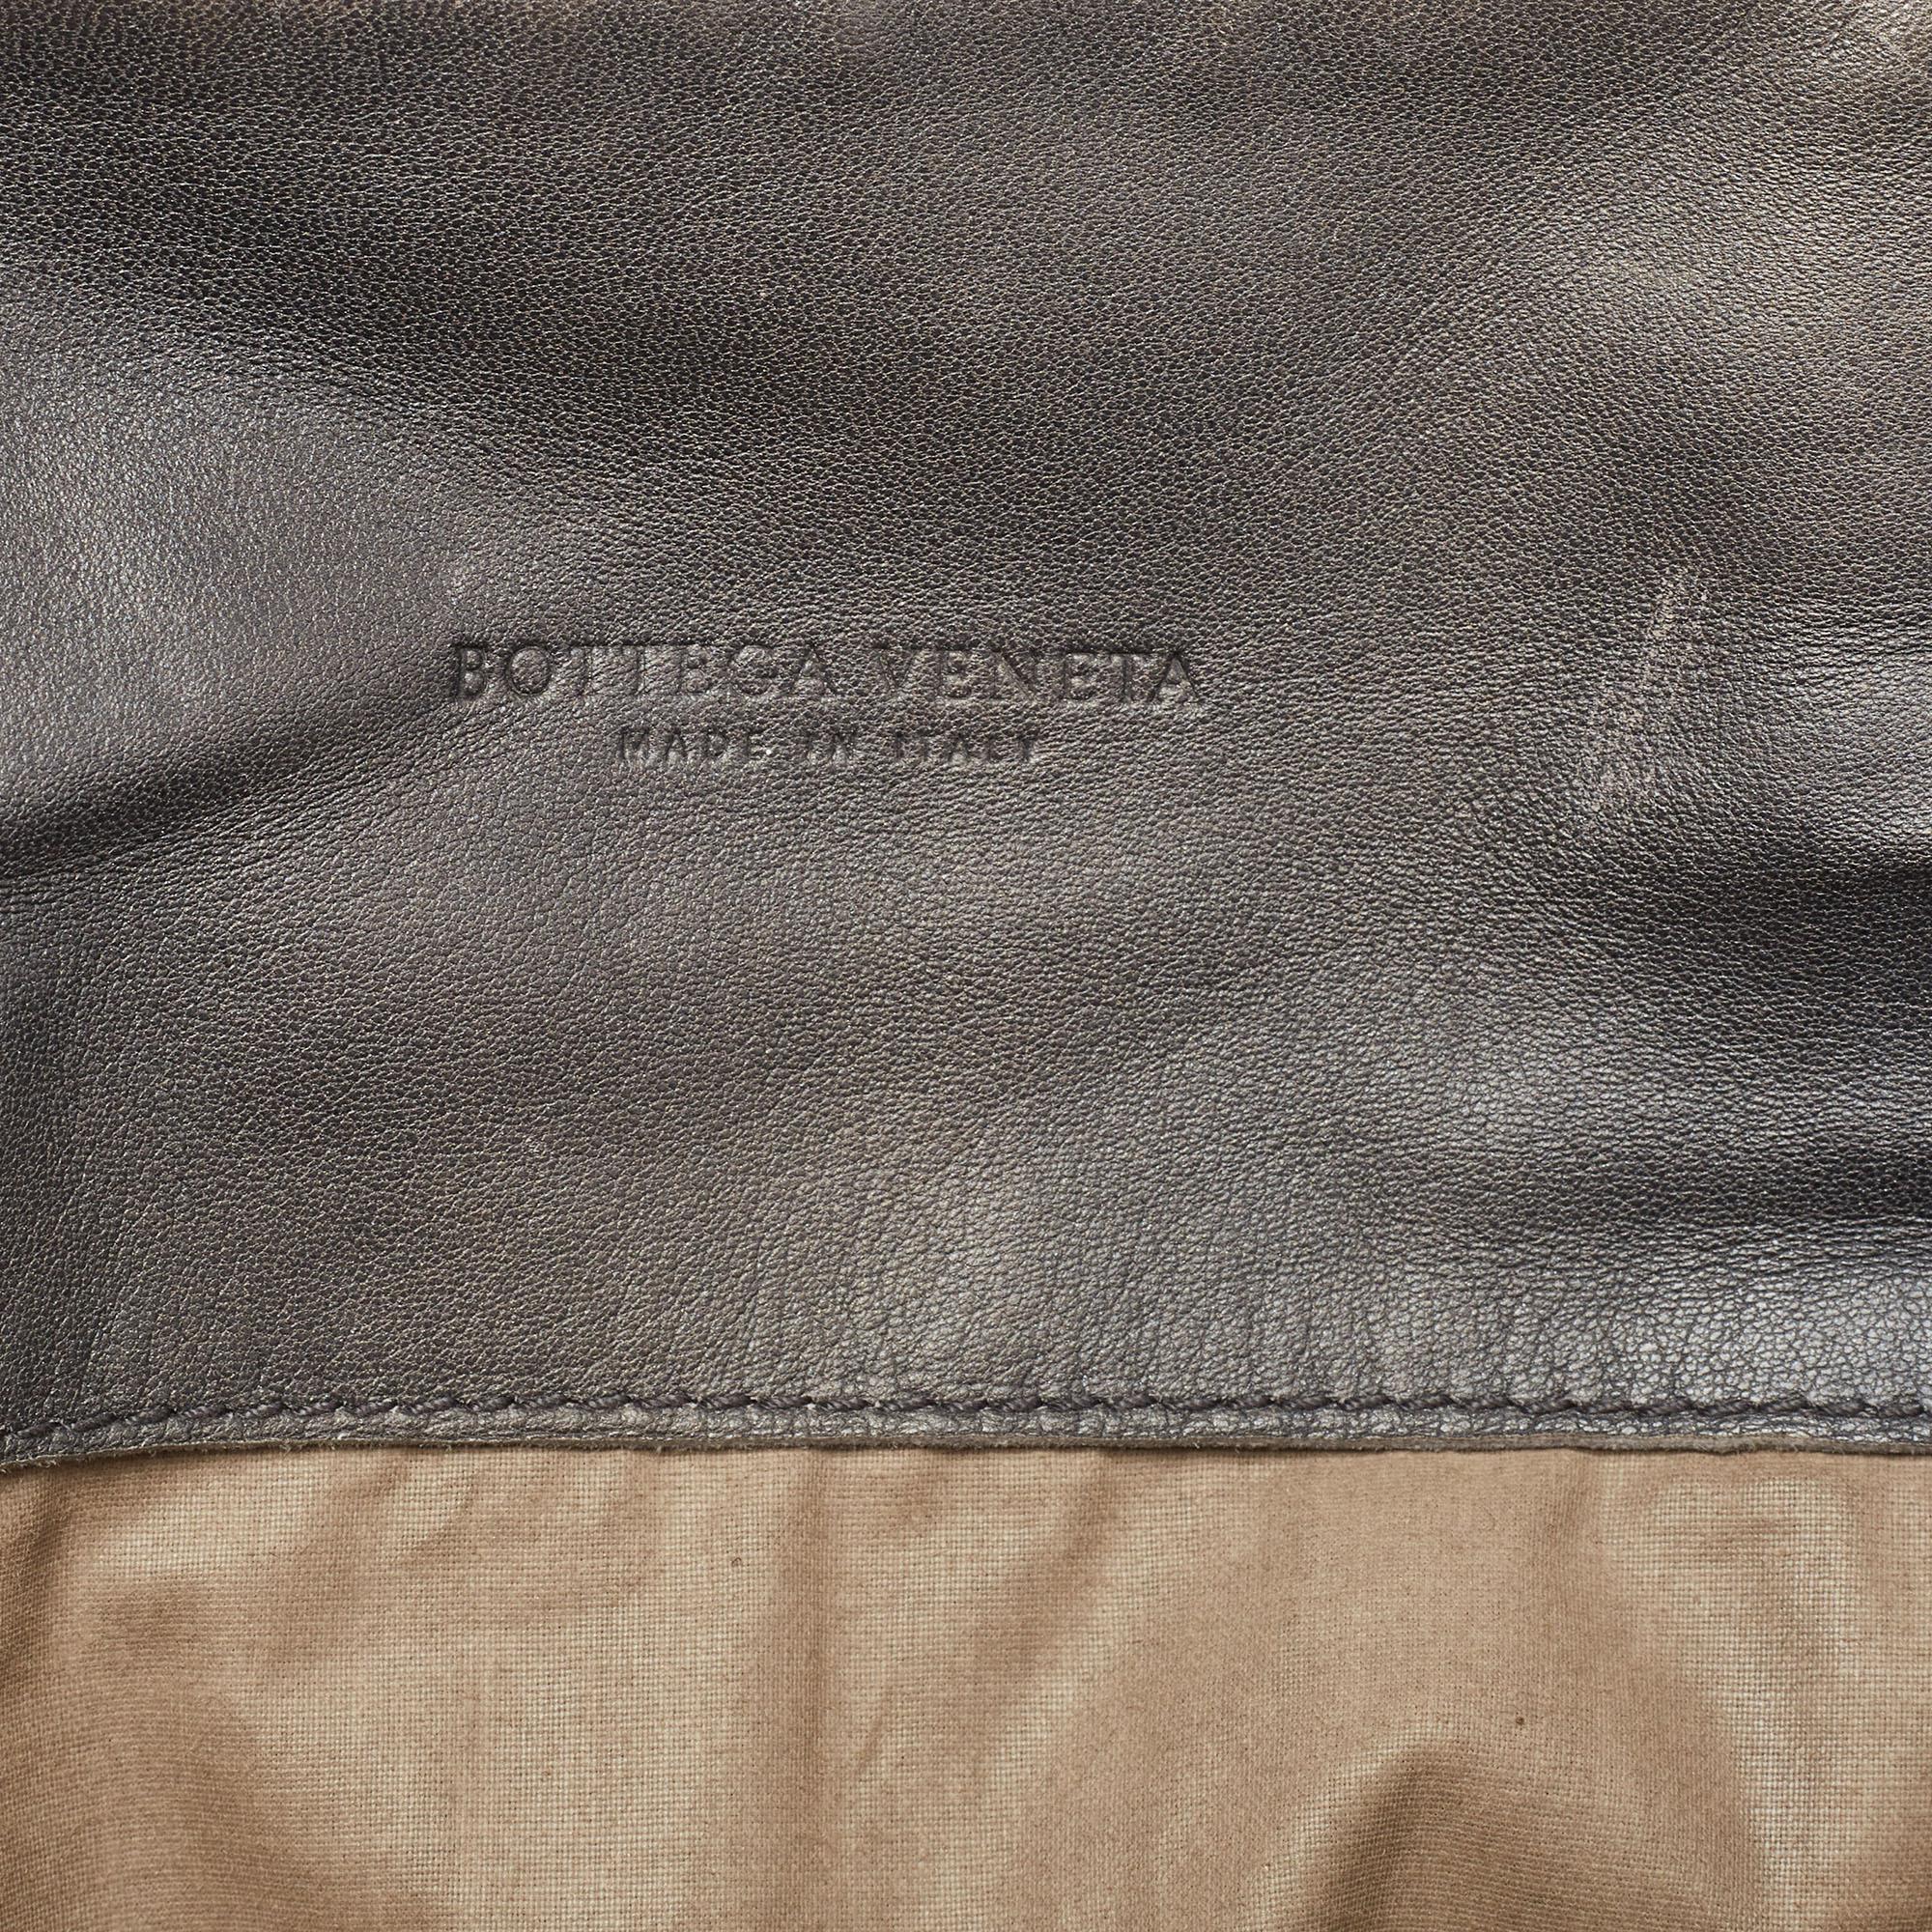 Bottega Veneta Grey Intrecciato Leather Zip Detail Tote For Sale 3